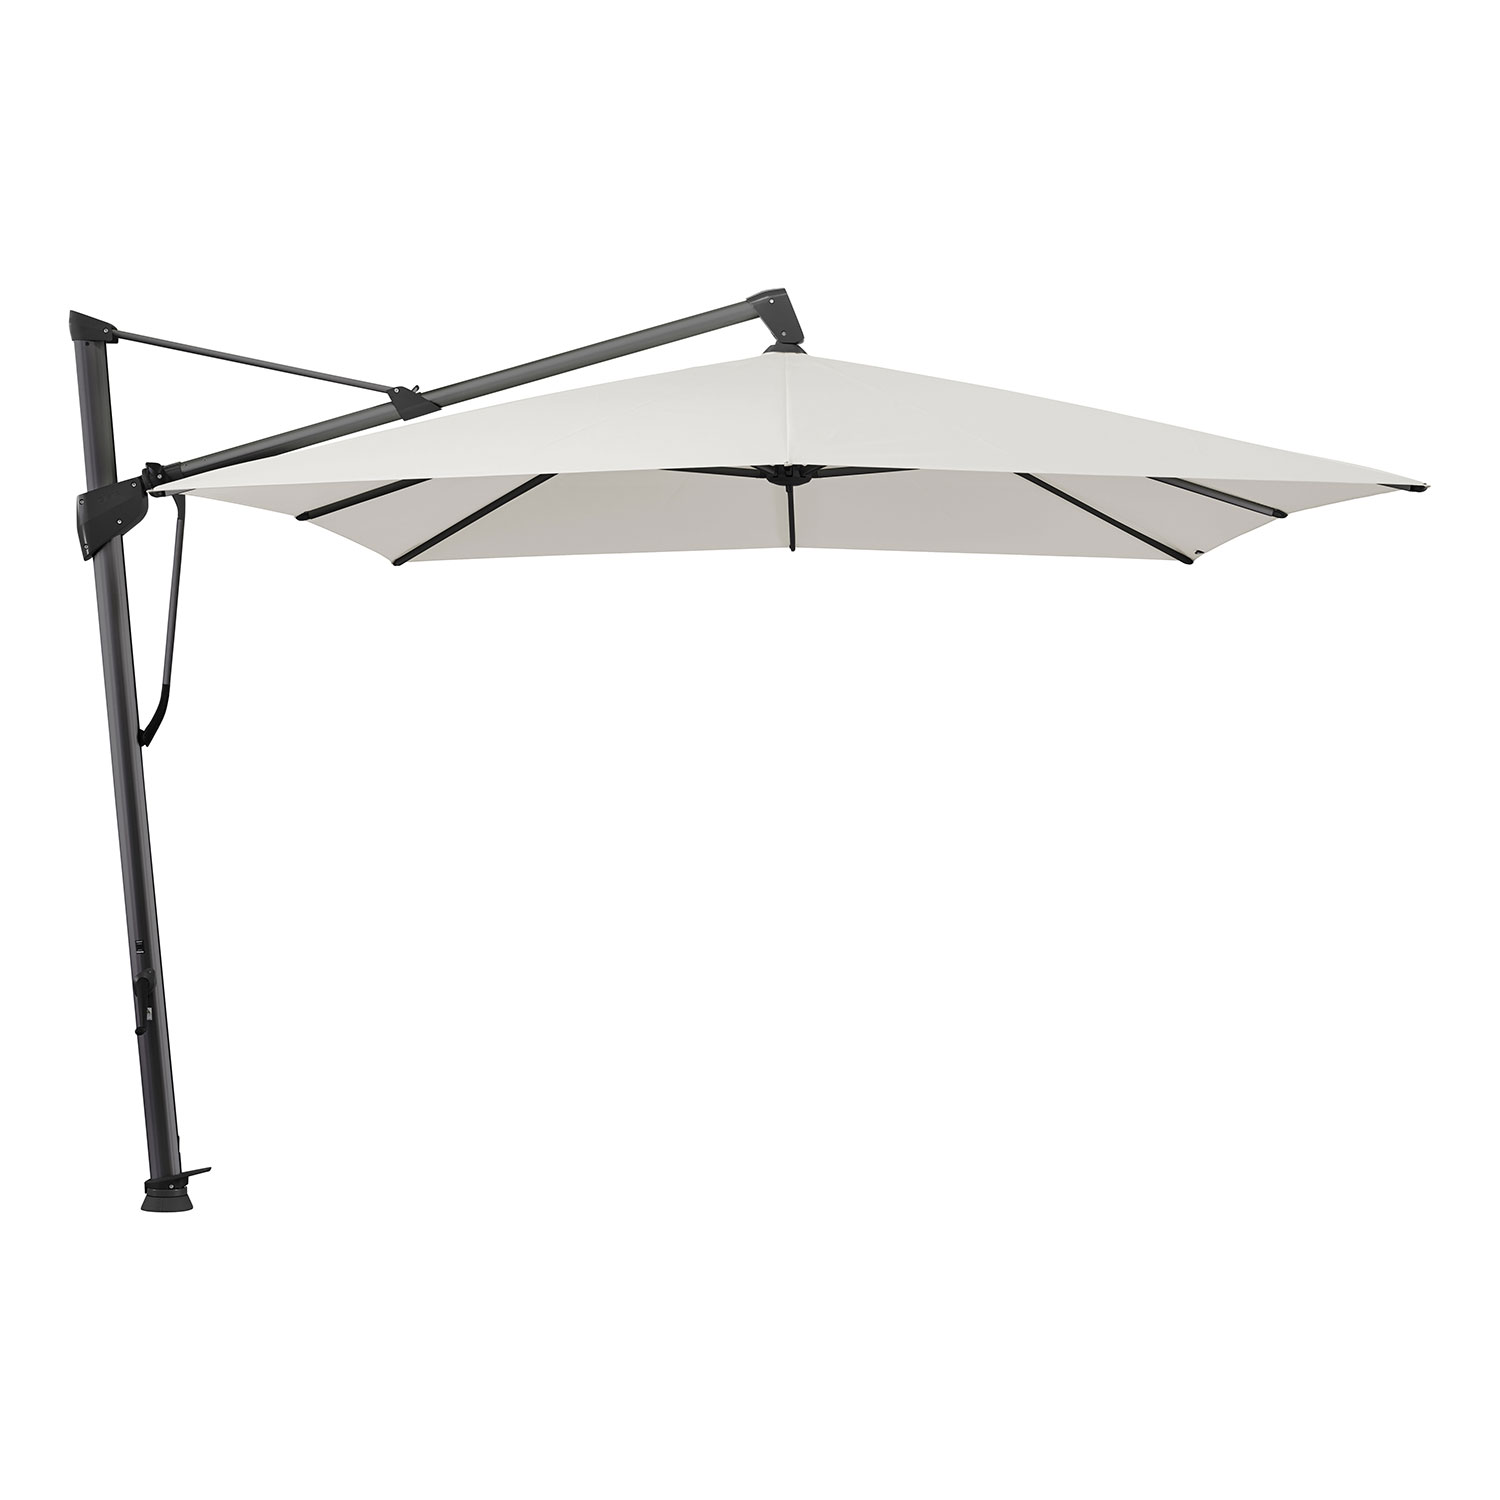 Sombrano S+ frihängande parasoll 400×300 cm kat.5 antracite alu / 500 plaster